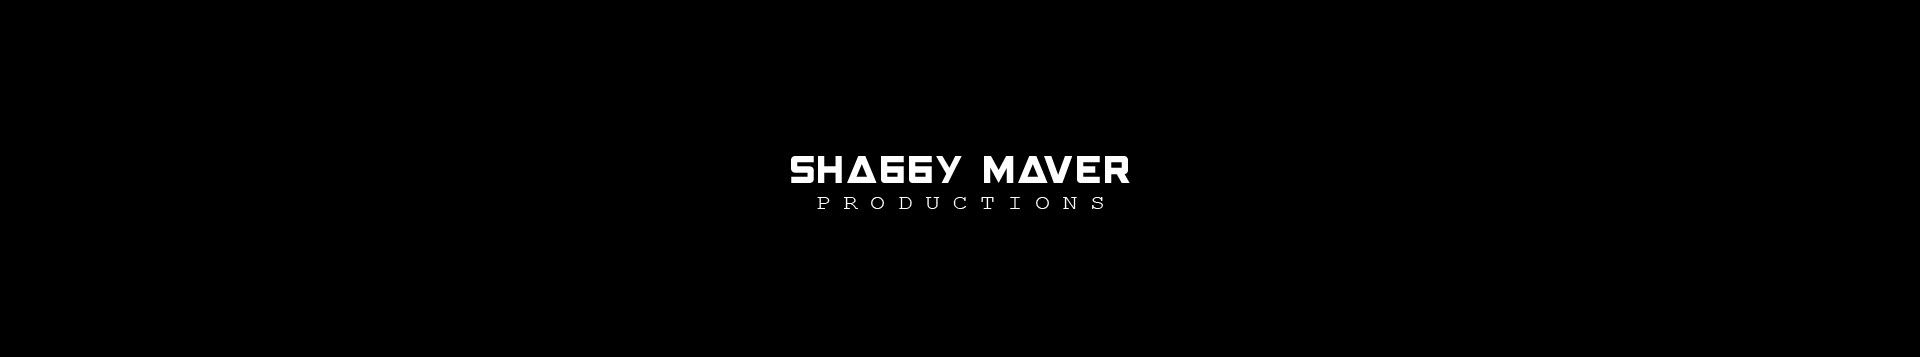 SHAGGY MAVER's profile banner